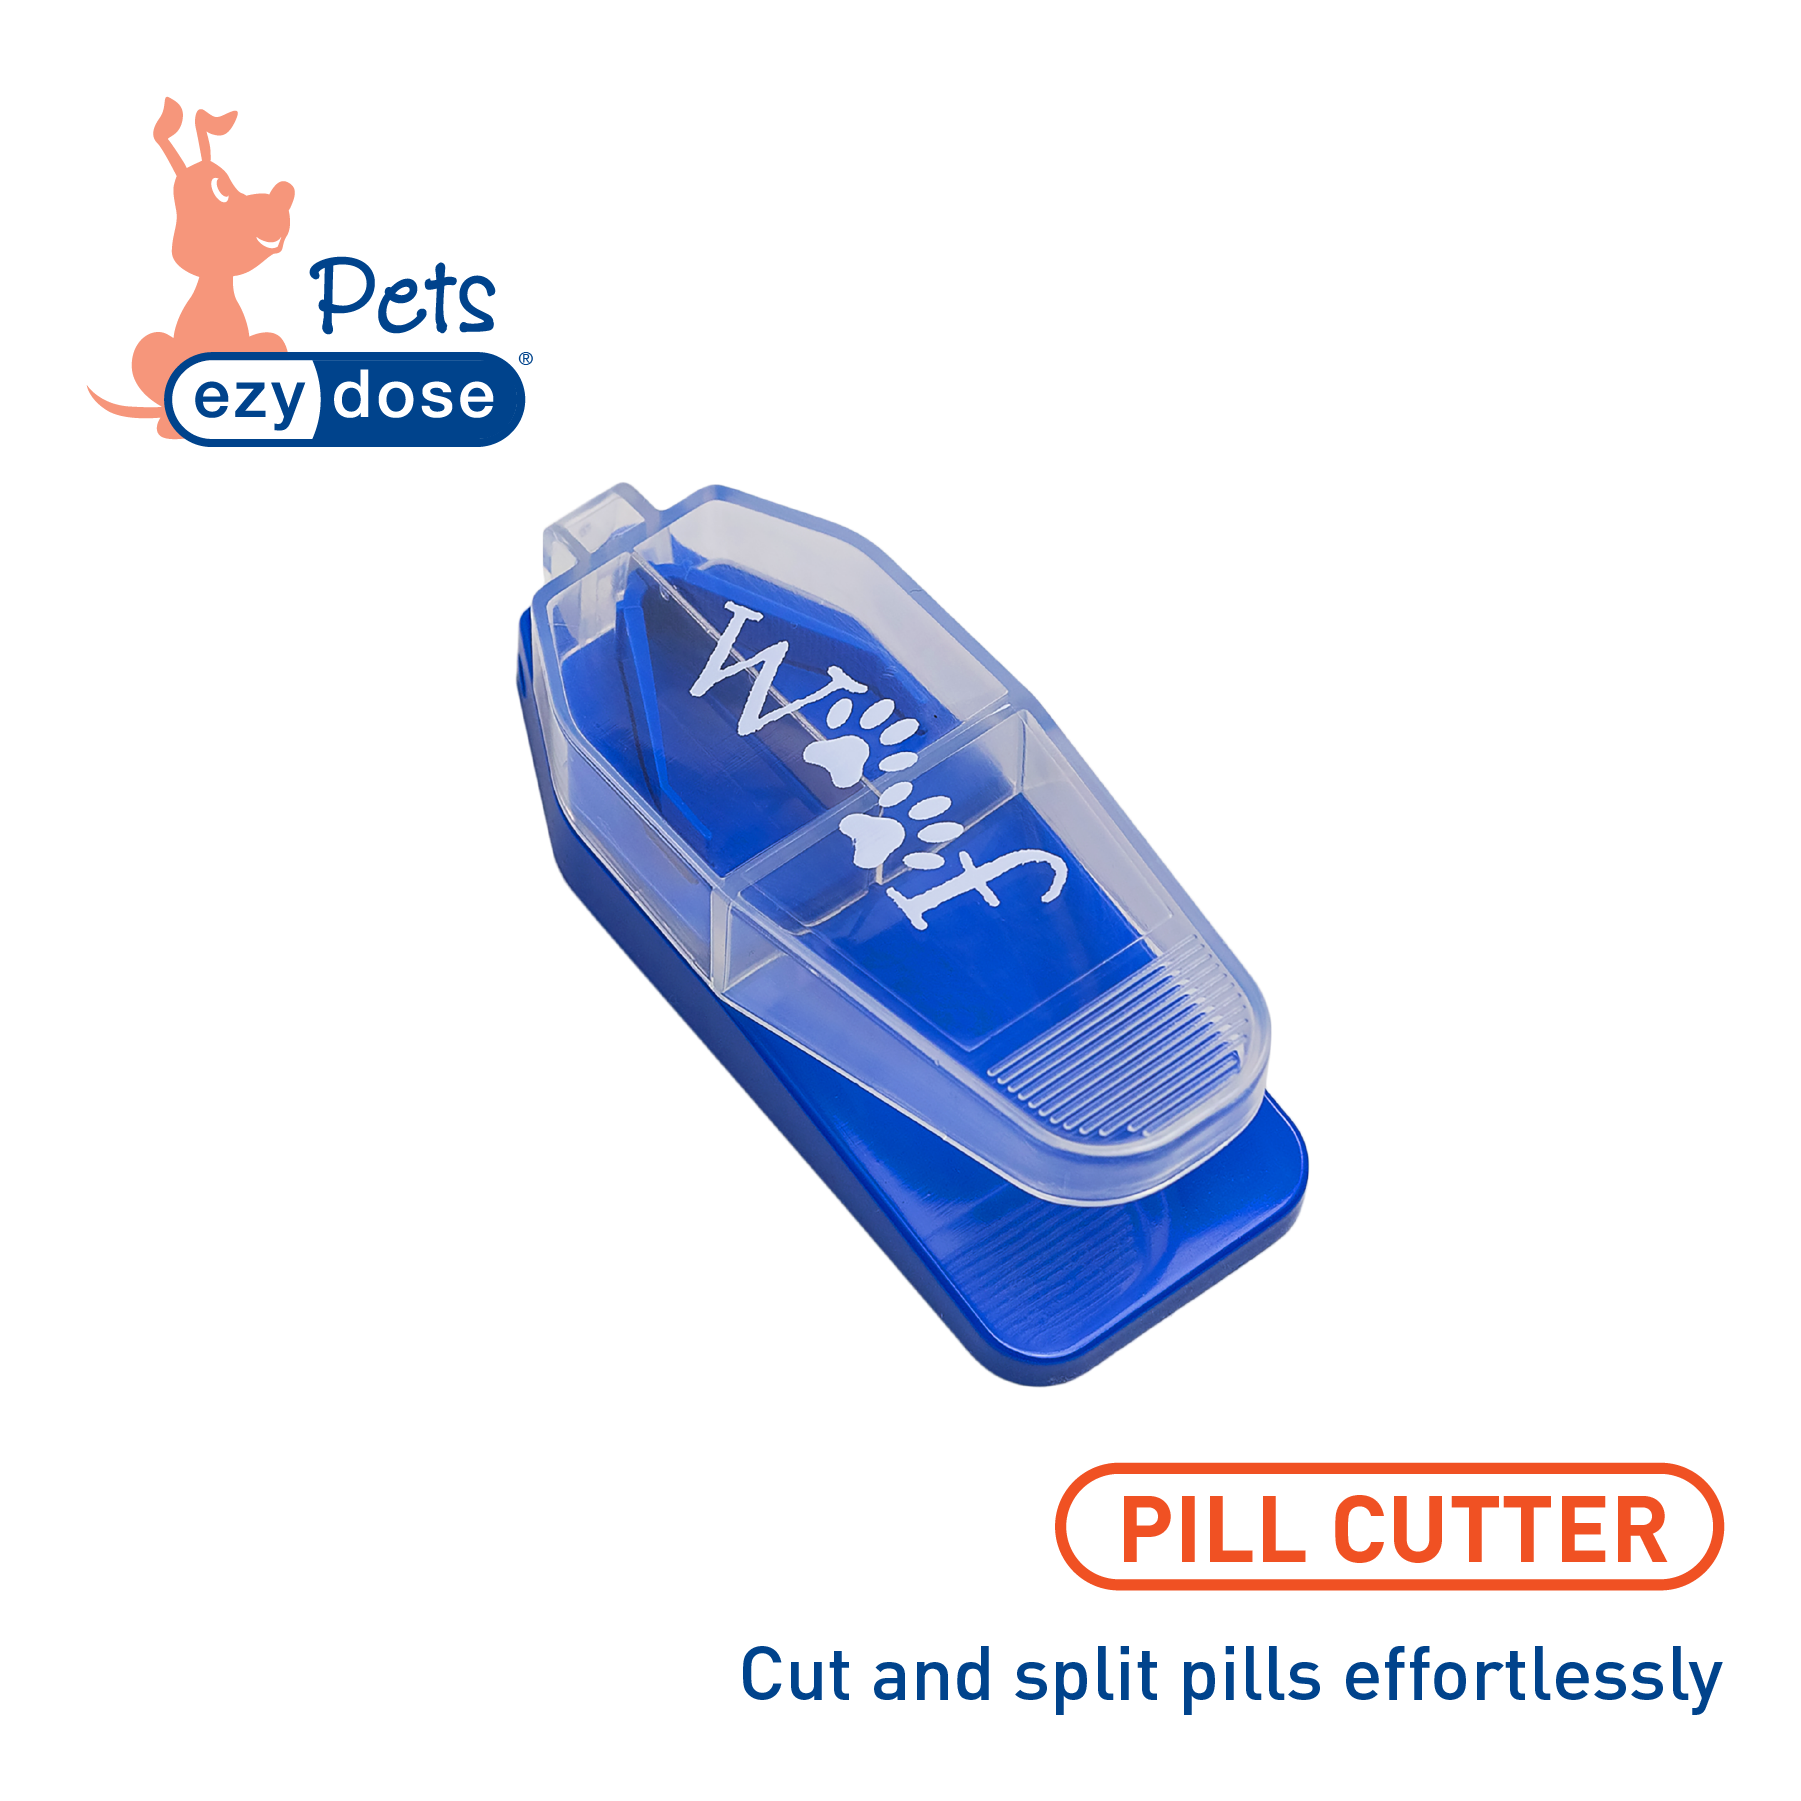 Pill cutter cuts and splits pills effortlessly